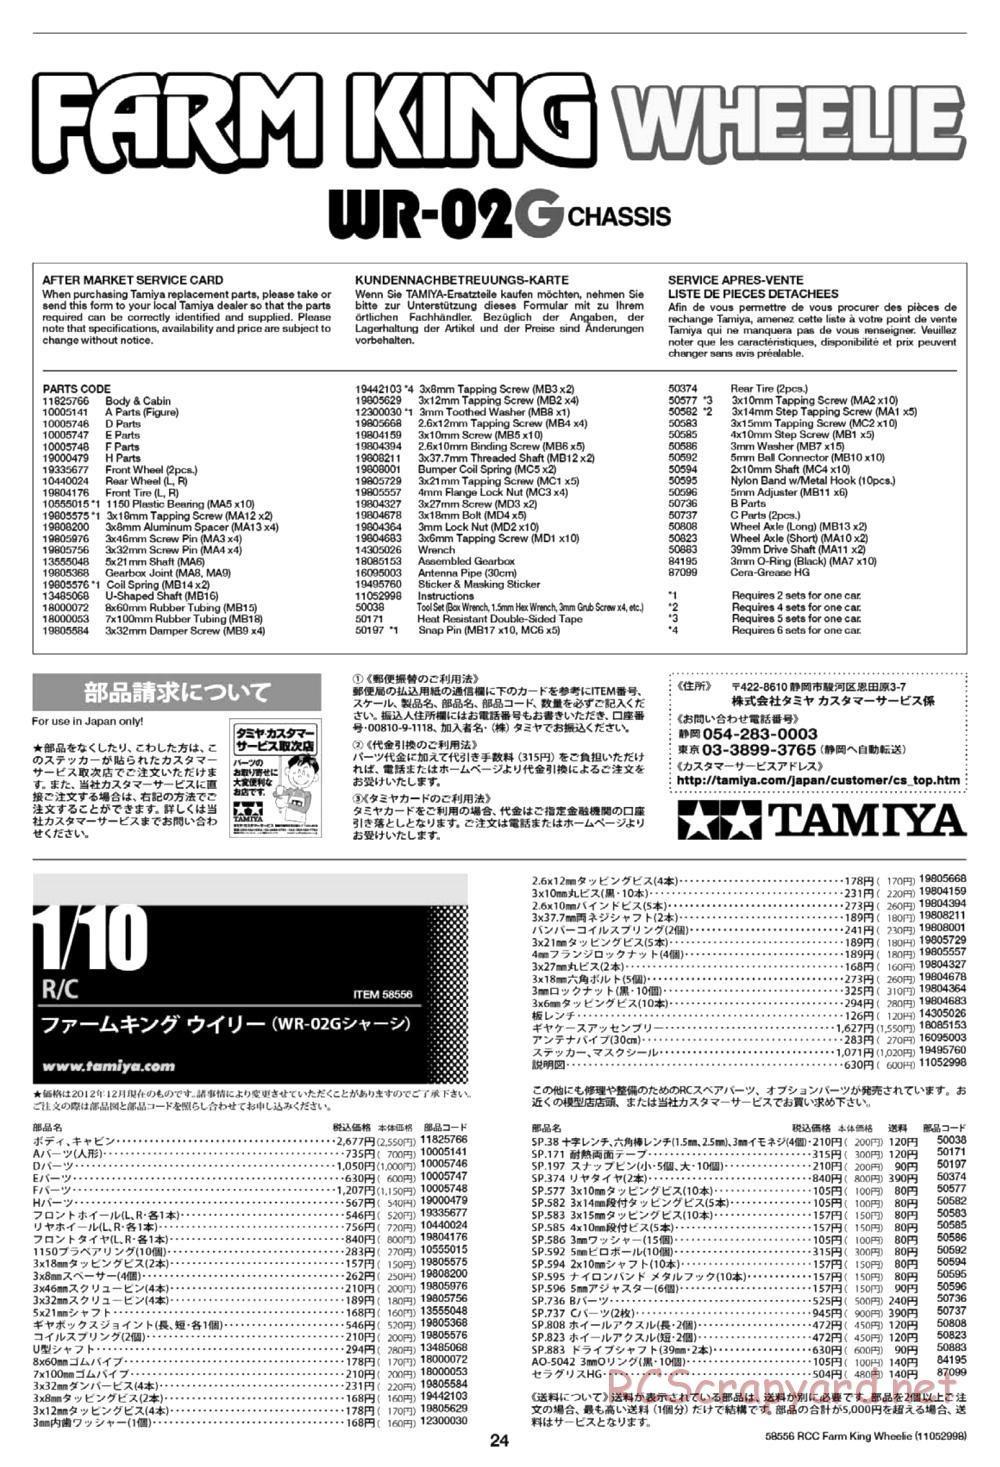 Tamiya - Farm King Wheelie Chassis - Manual - Page 24